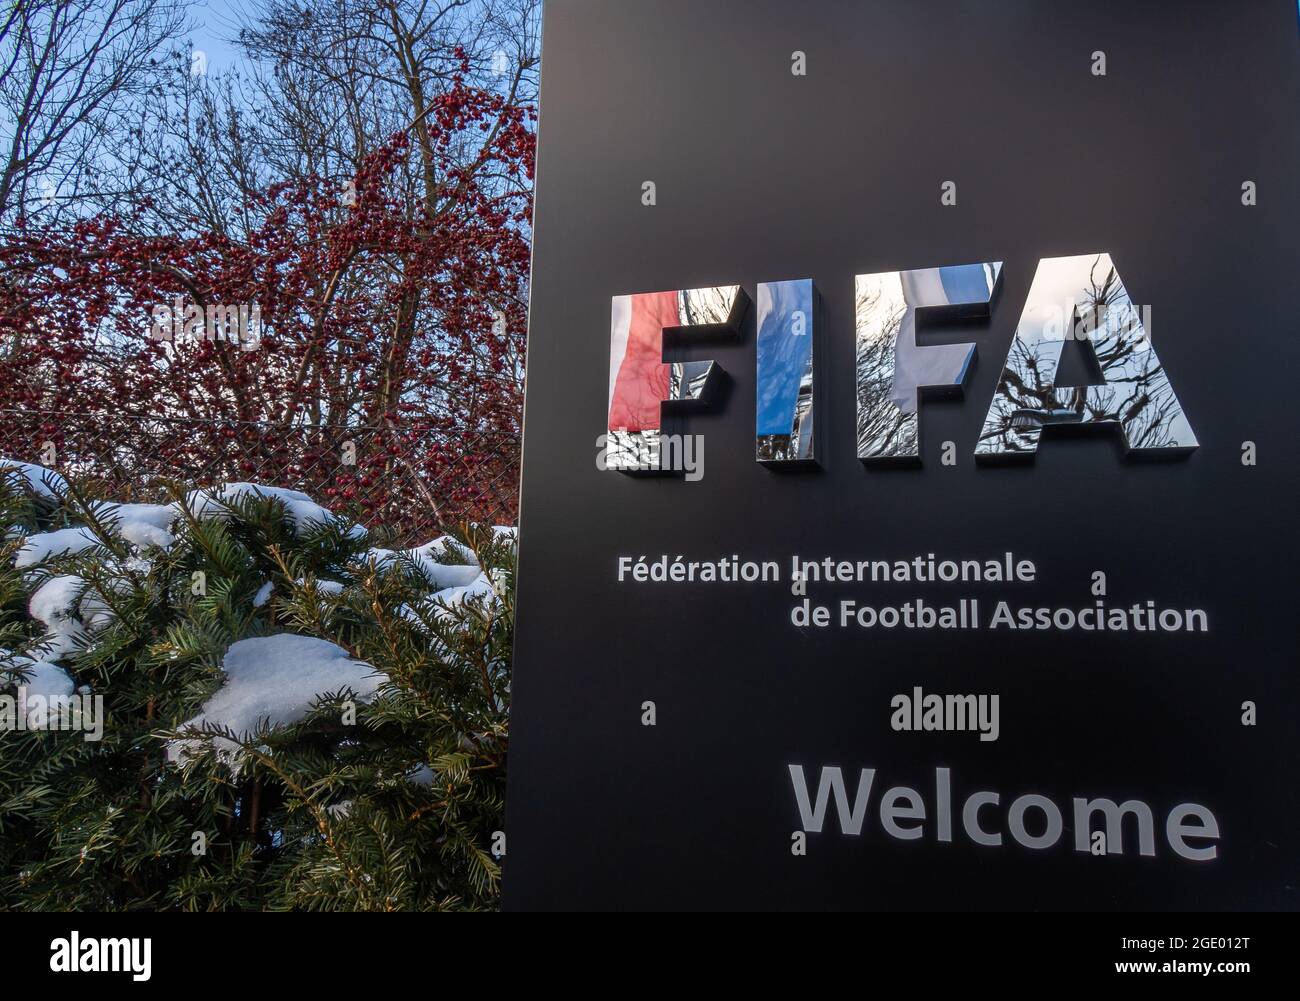 Zurich, Switzerland - January 10, 2021: FIFA is a non-profit organization and an international governing body of association football, futsal and beac Stock Photo